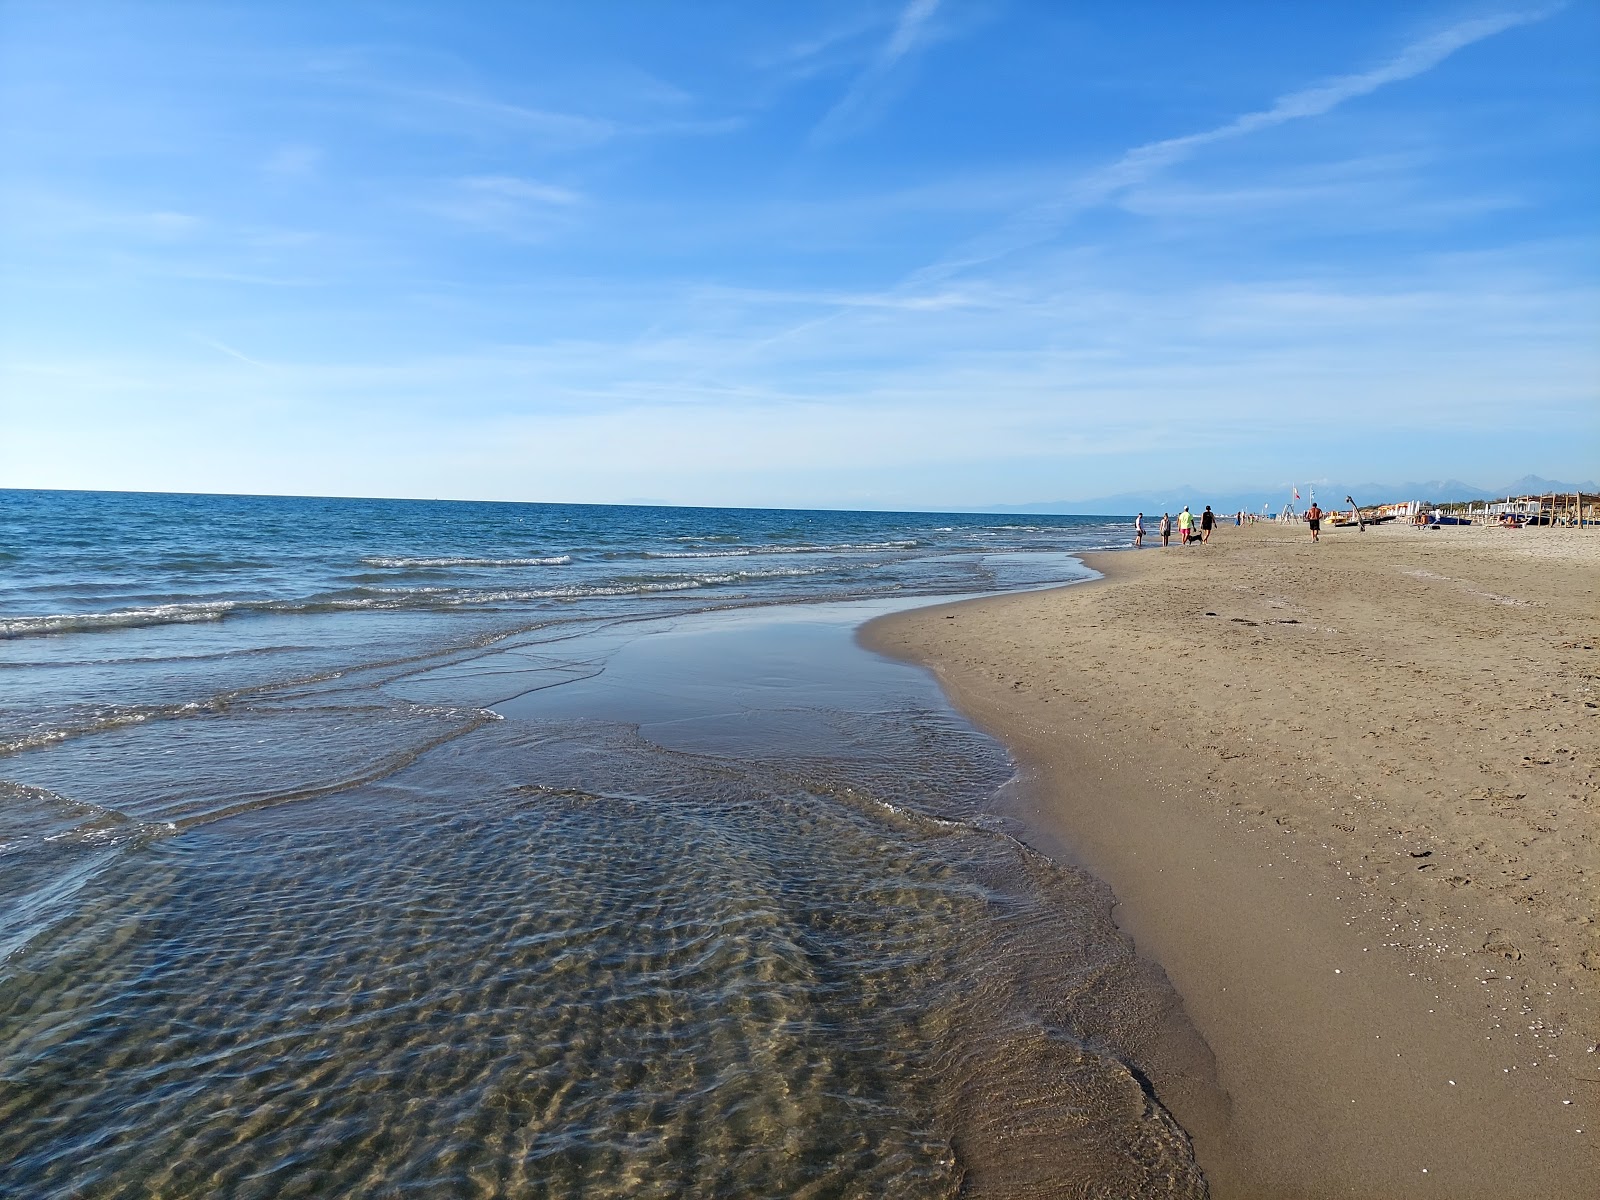 Fotografija Spiaggia Libera Tirrenia z turkizna čista voda površino